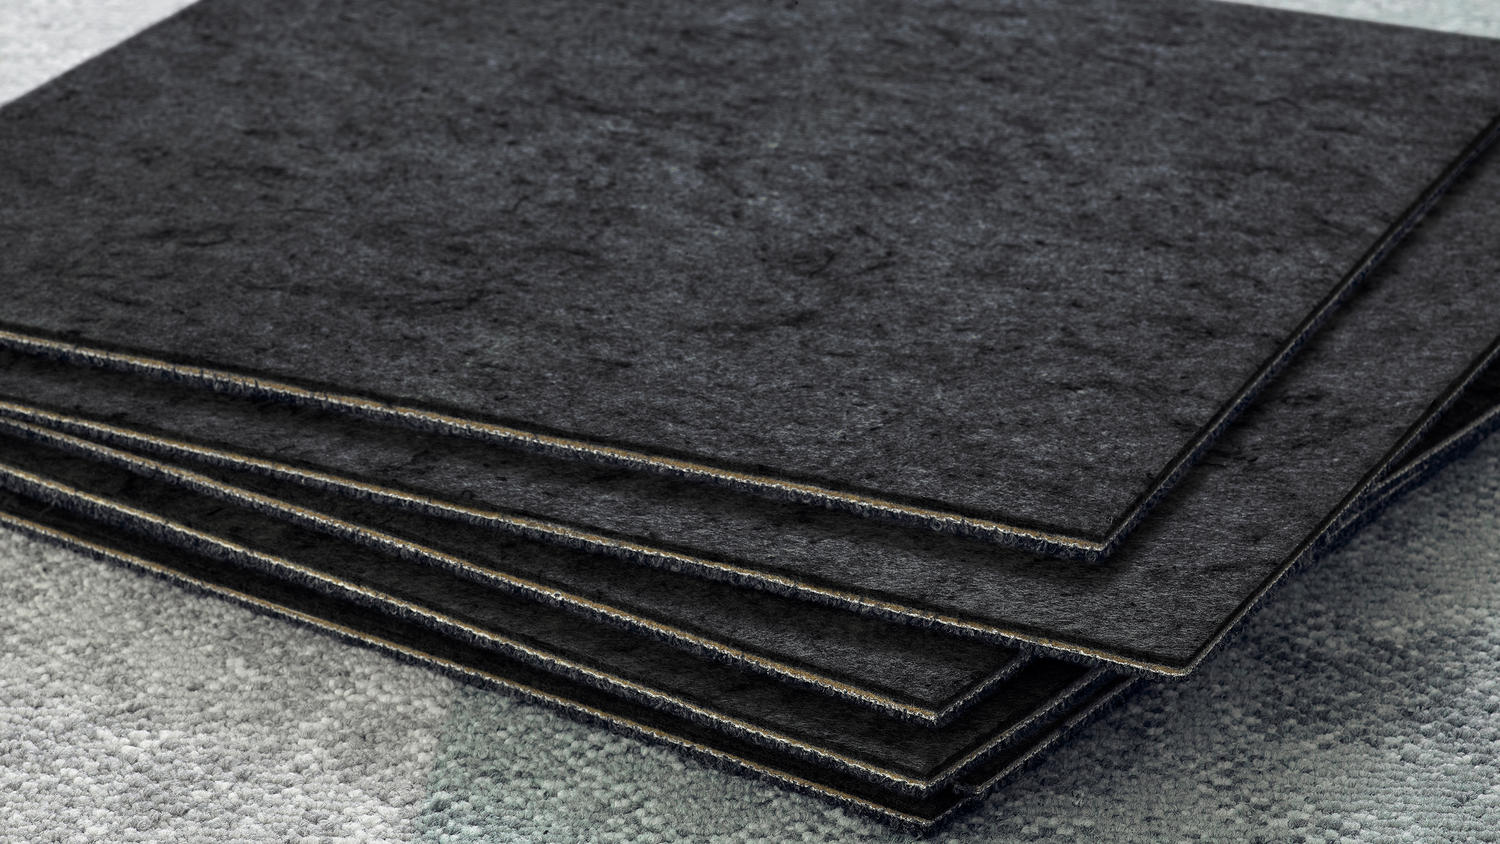 Carpet tiles showing the DESSO SoundMaster Thrive acoustic felt underlay